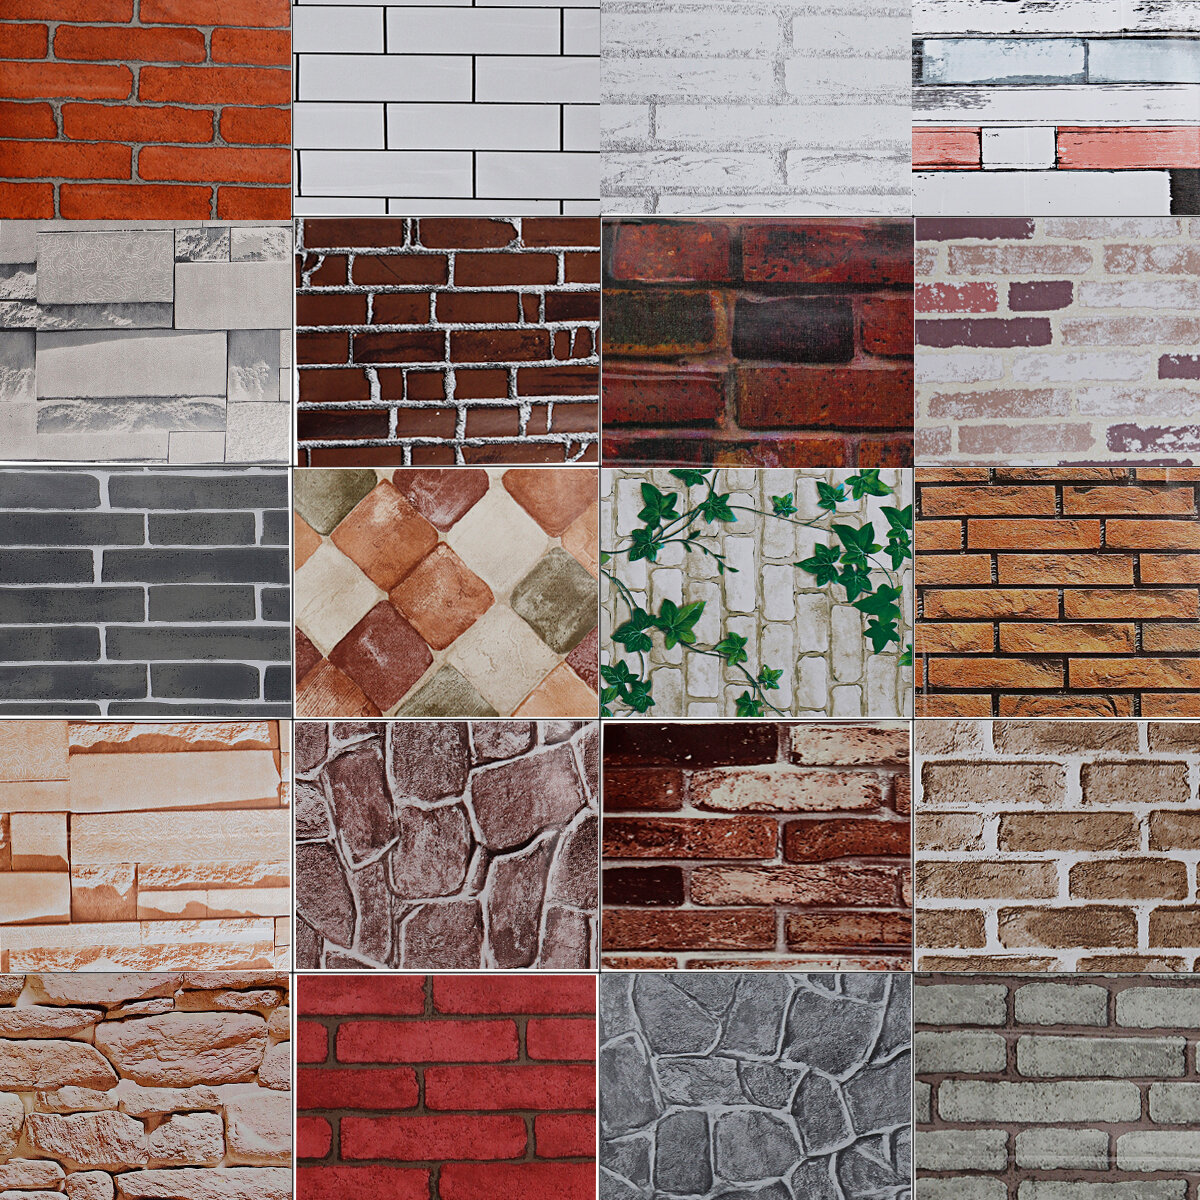 3D Retro Wall Sticker Self-adhesive Simulation Brick Rock Wallpaper Home Office Wall Decor Stickers